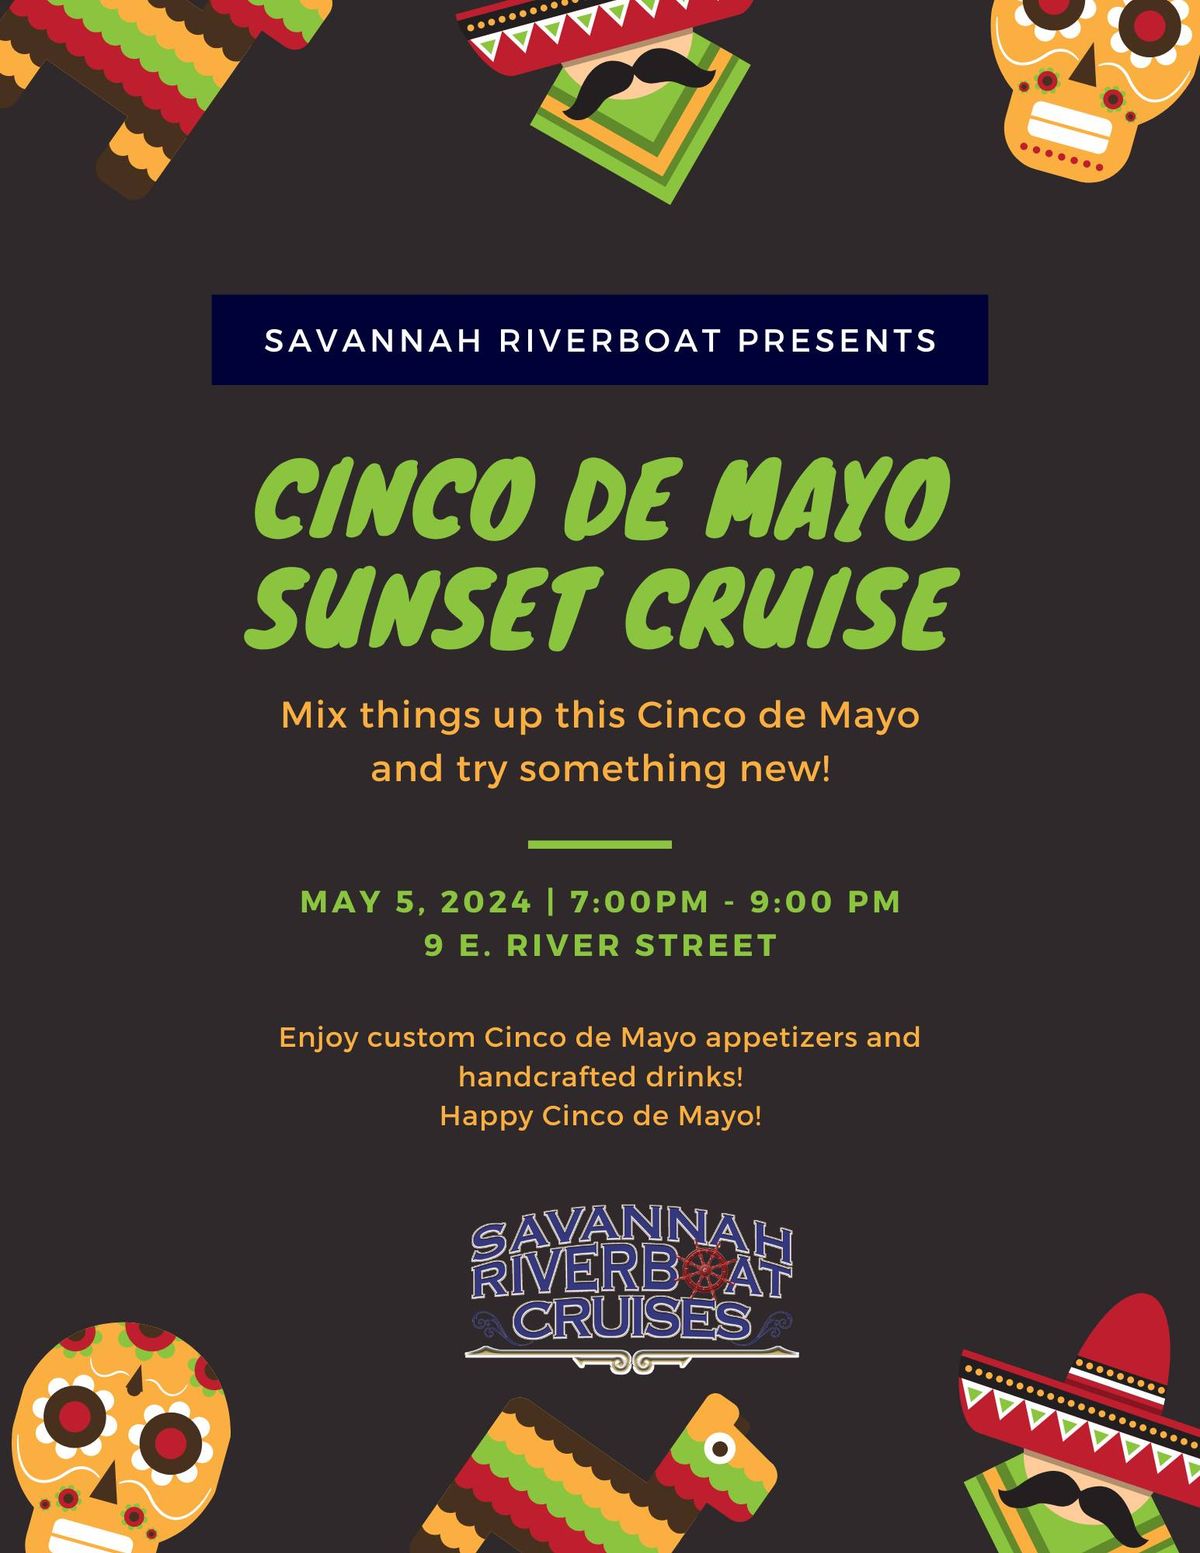 Sunset Cruise on Cinco De Mayo!